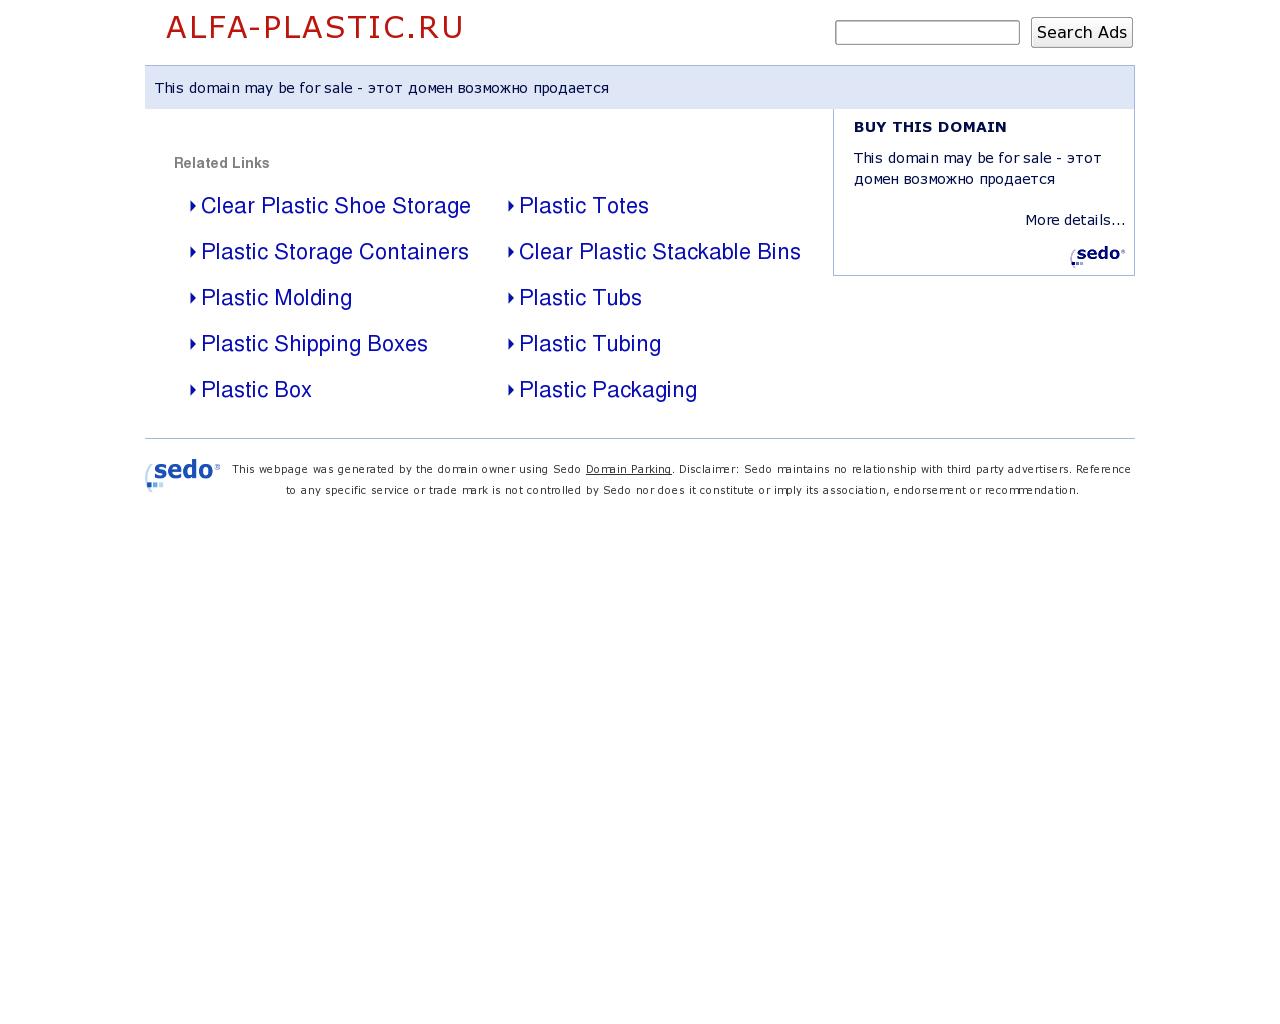 Изображение сайта alfa-plastic.ru в разрешении 1280x1024